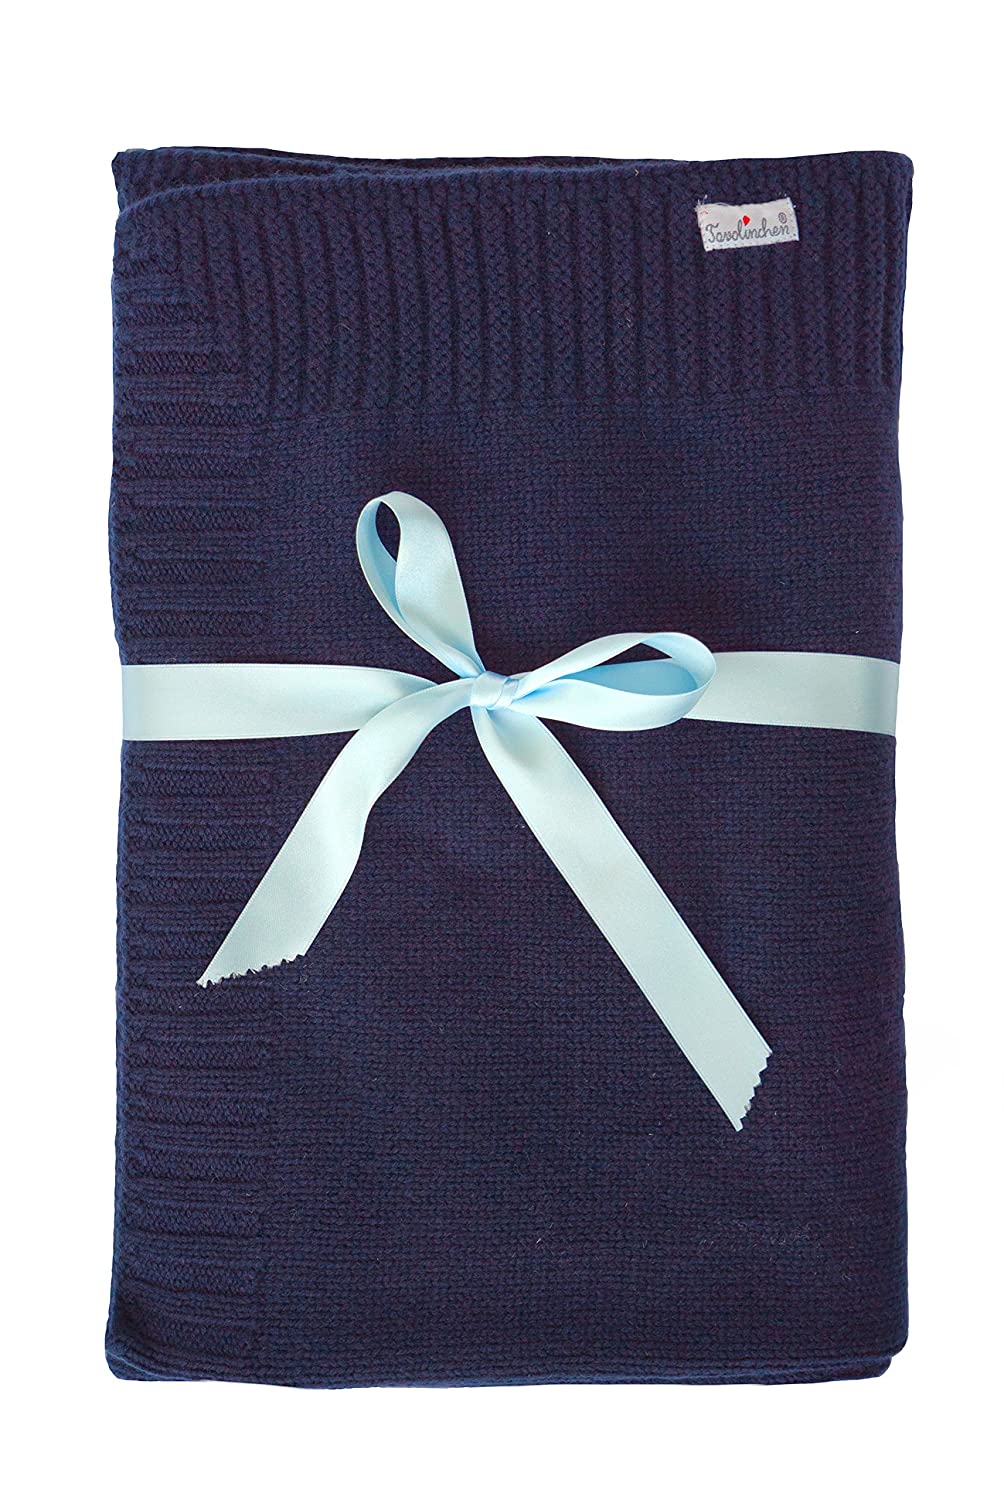 Exclusive Cashmere Cashmere Blanket – 100% Pure Cashmere  Navy